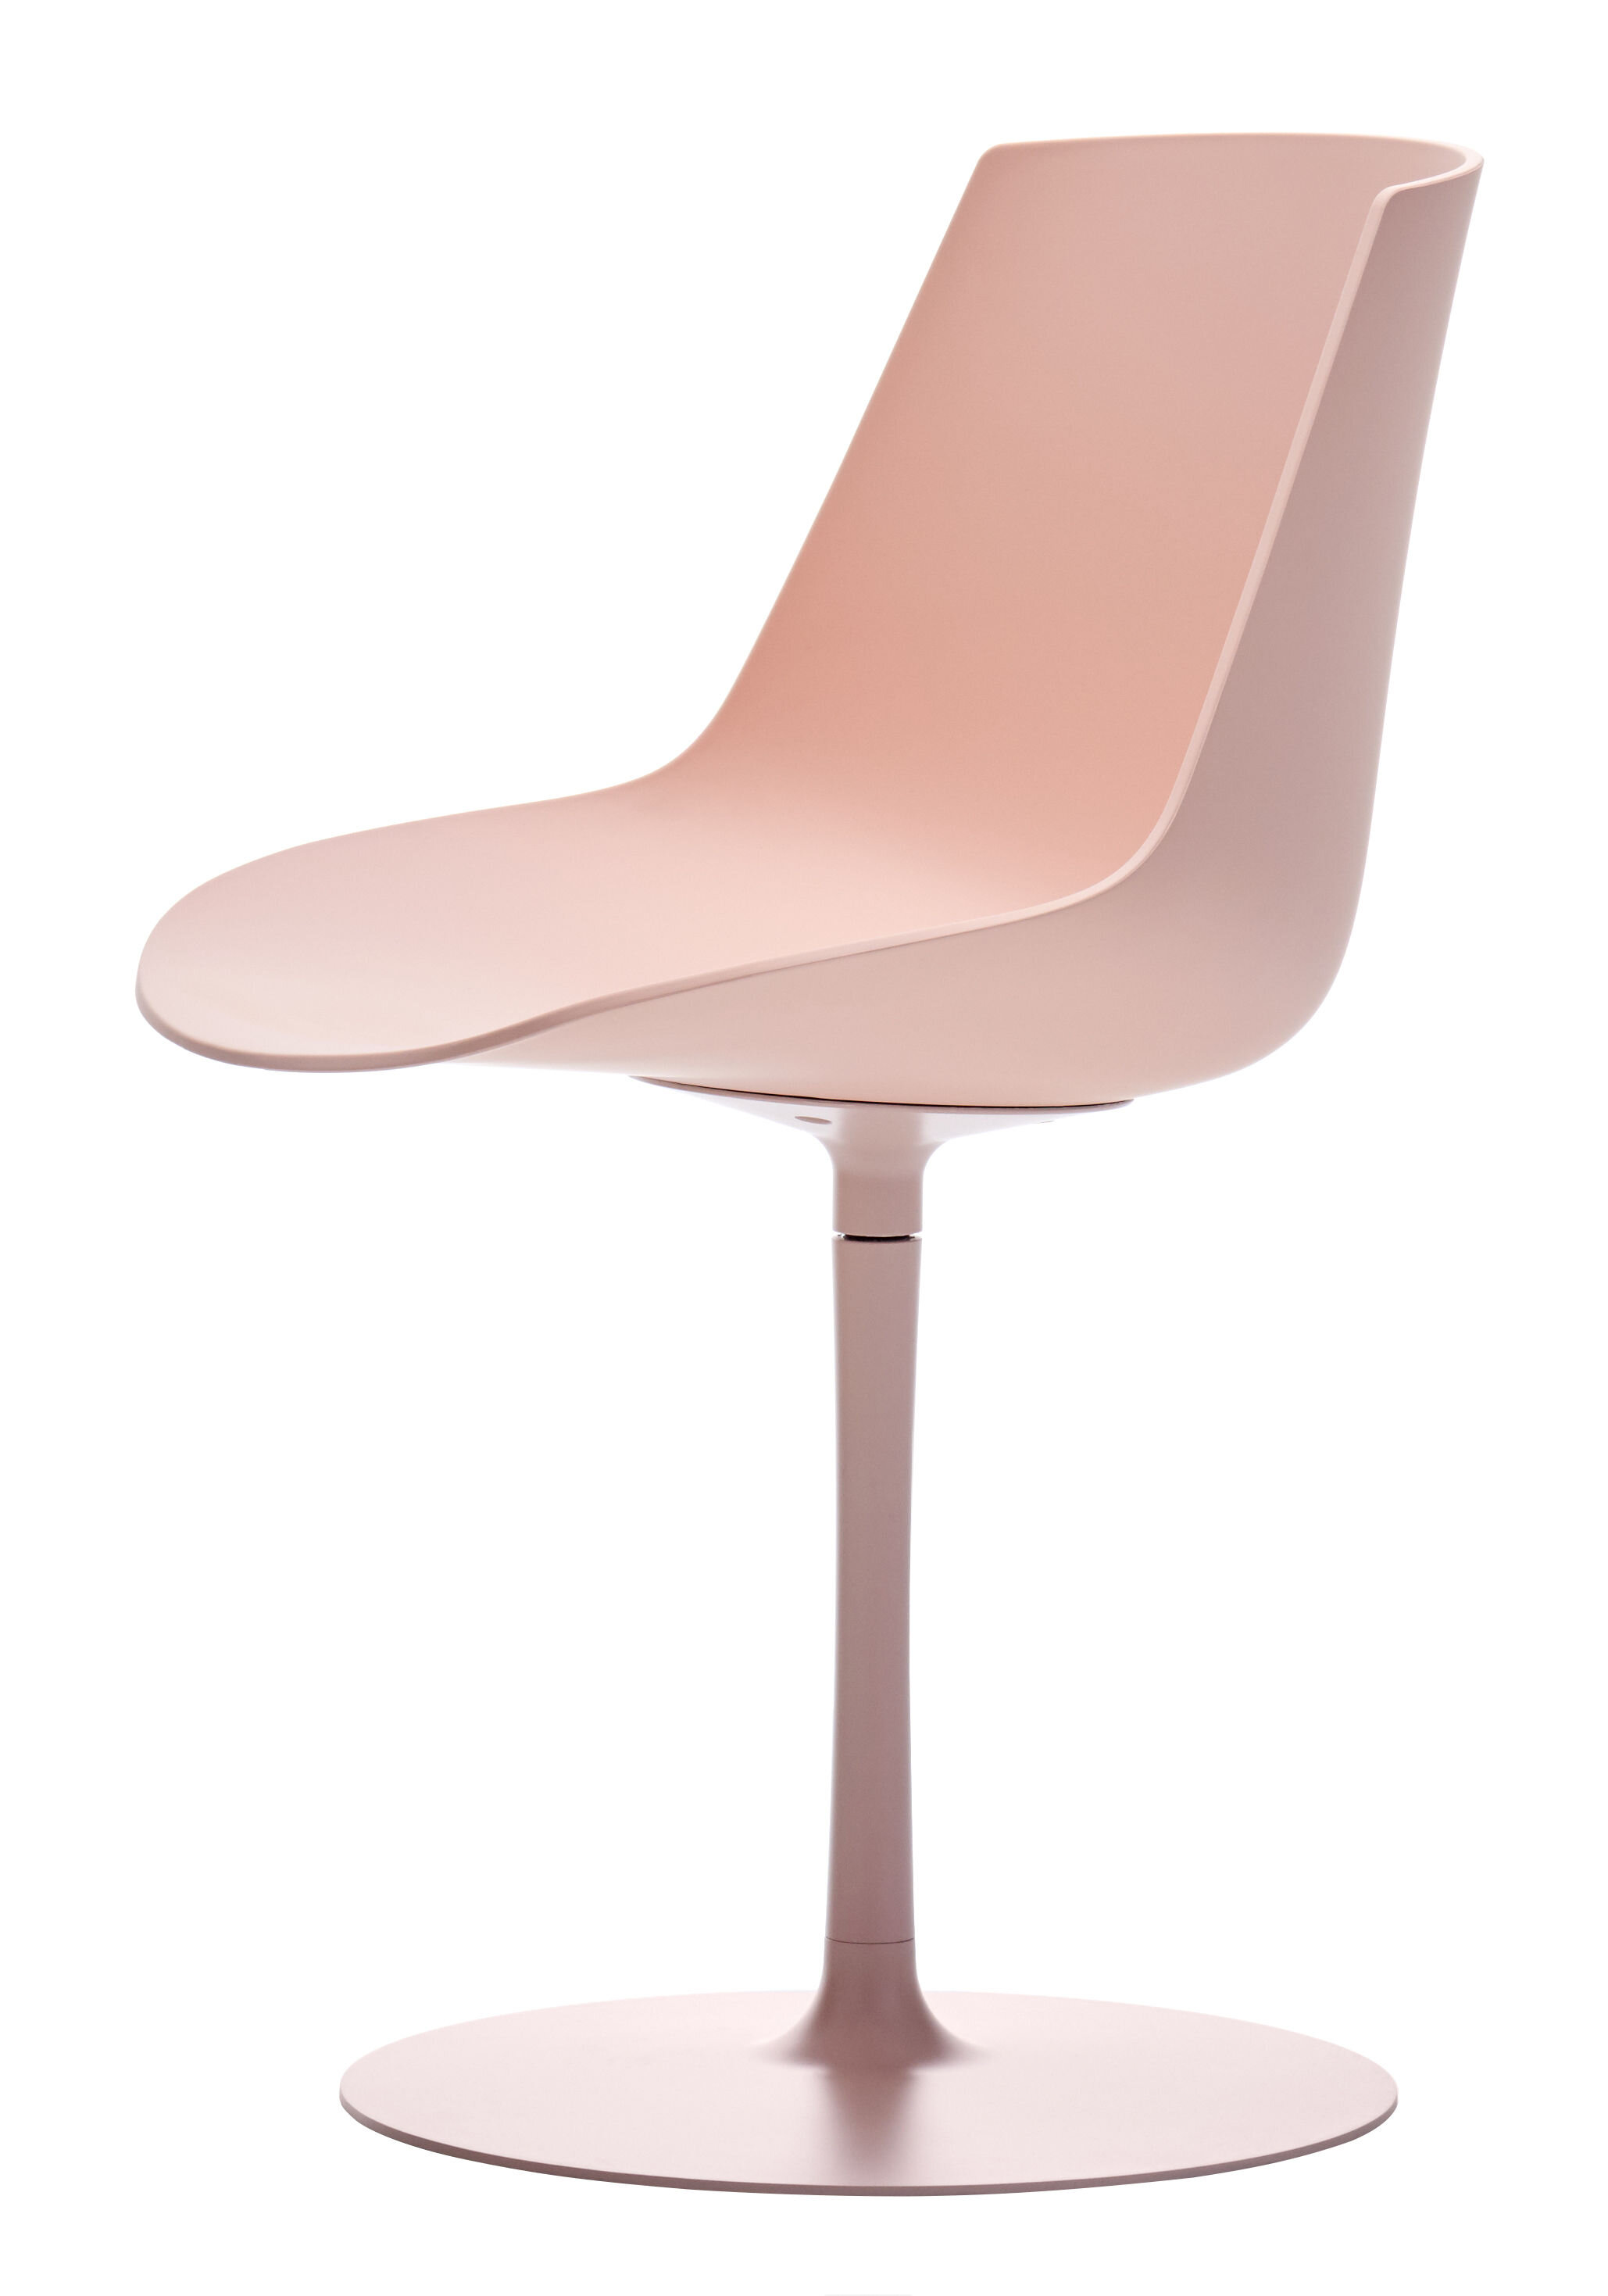 bestof-chaise-bureau-pascher-chaise-pivotante-flow-color-rose-pale_madeindesign_285081_original.jpg